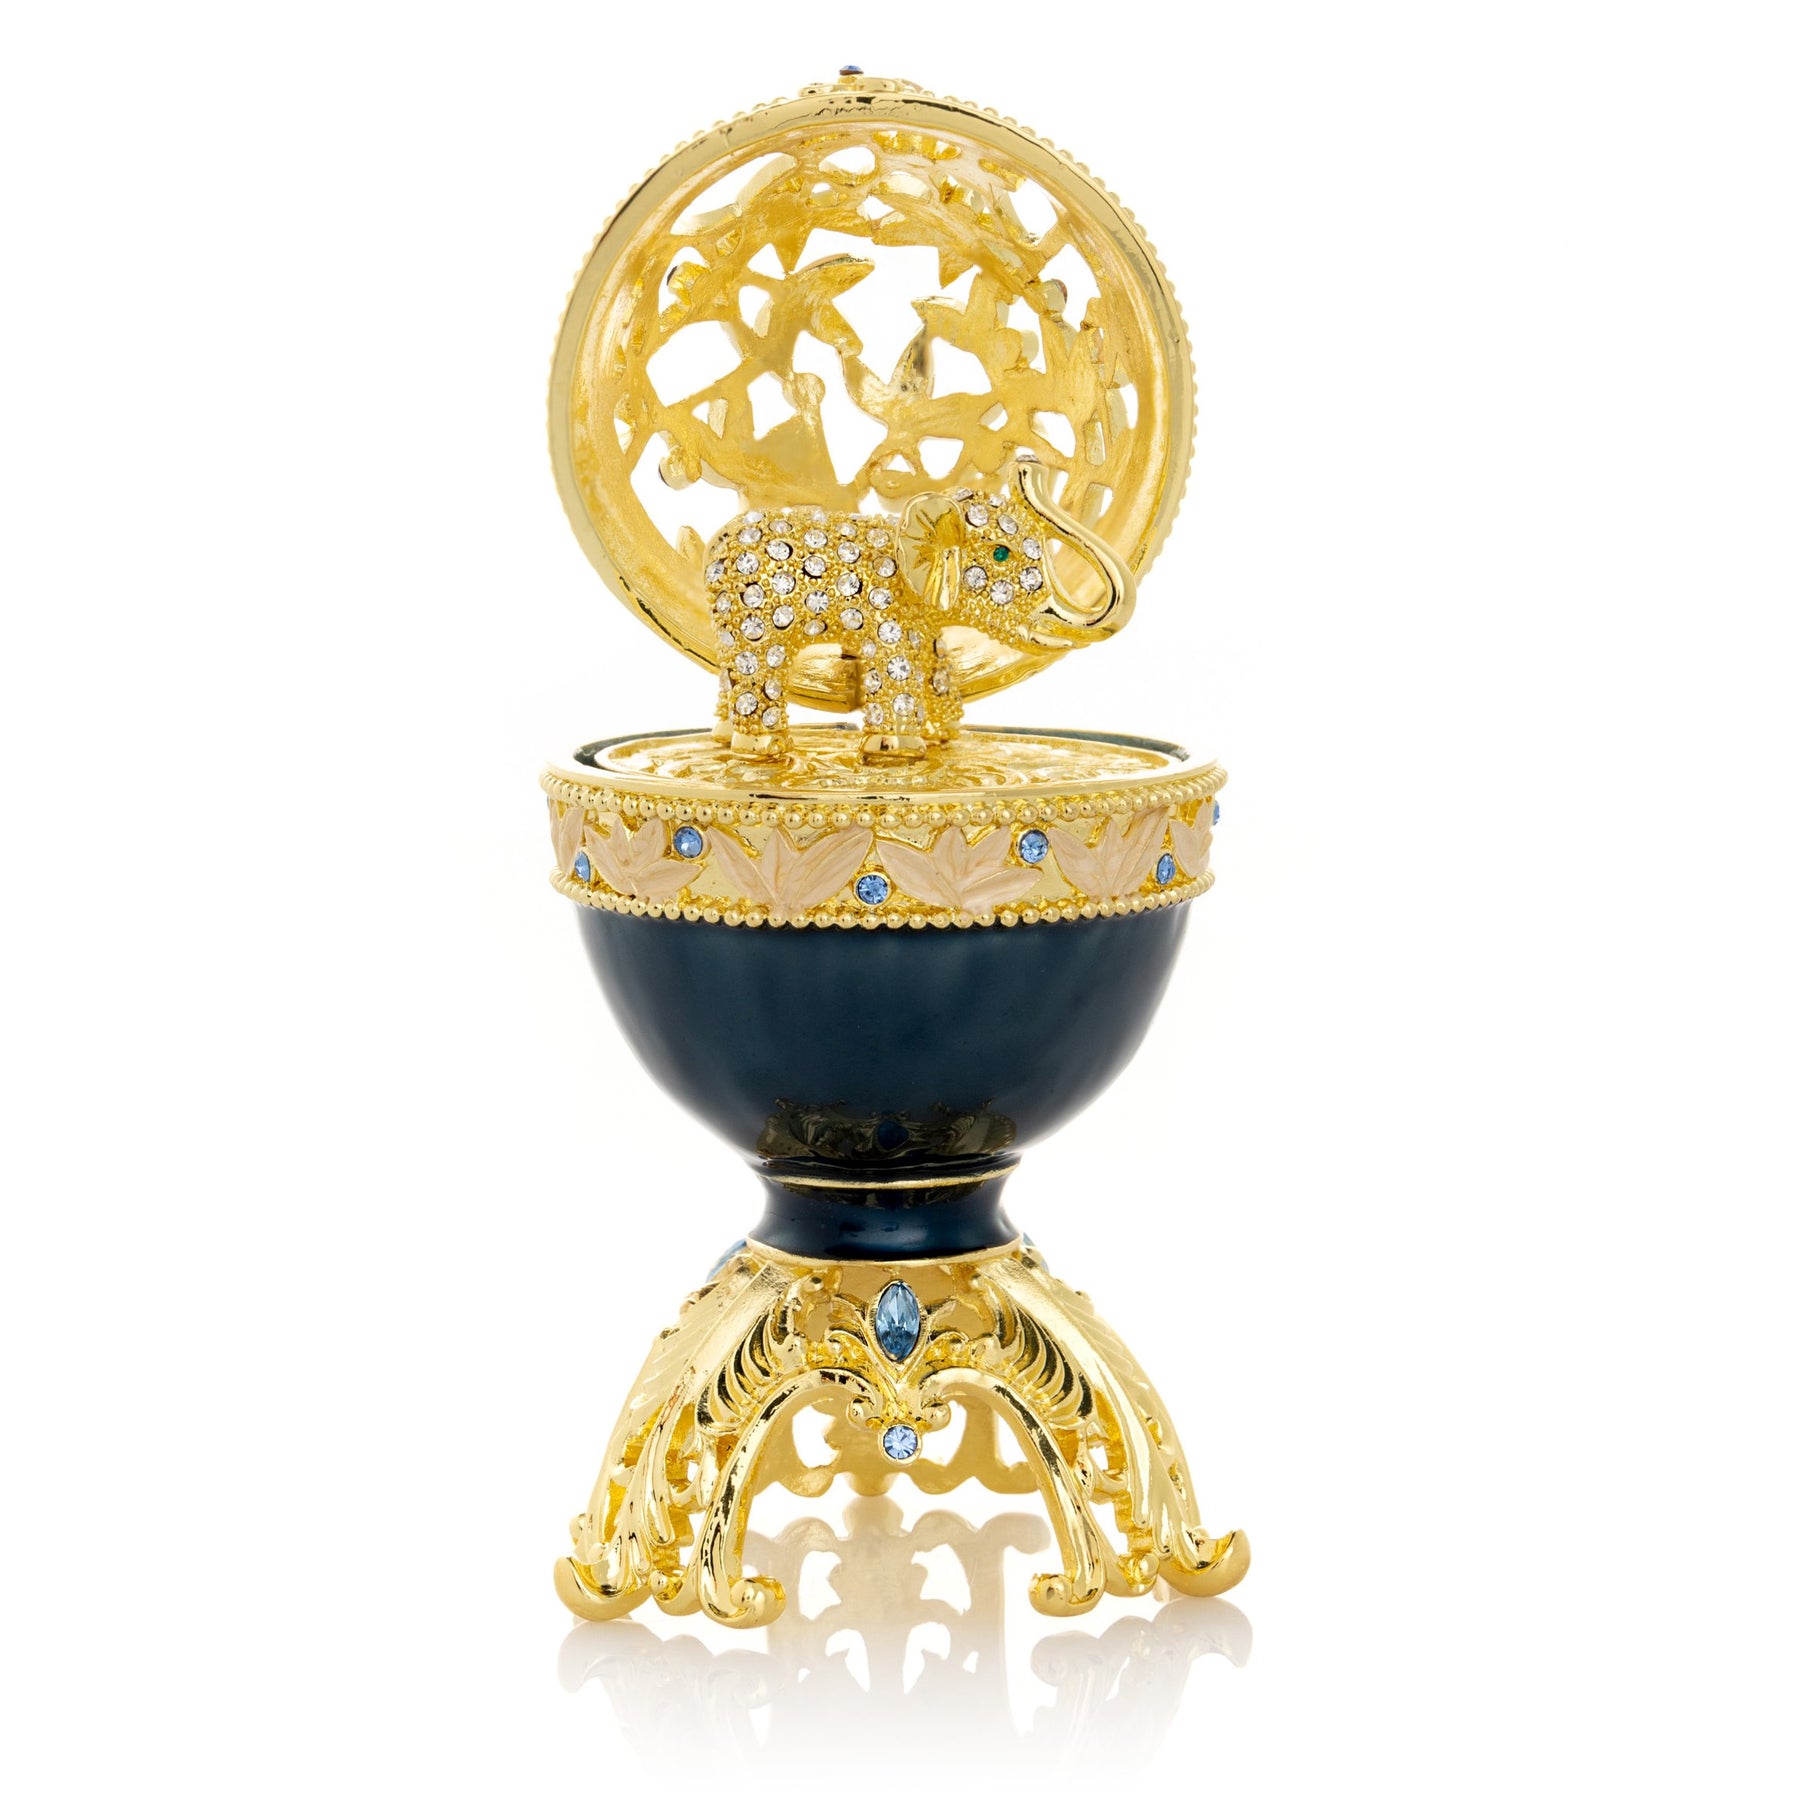 Goldenes blaues Fabergé-Ei mit einem goldenen Elefanten